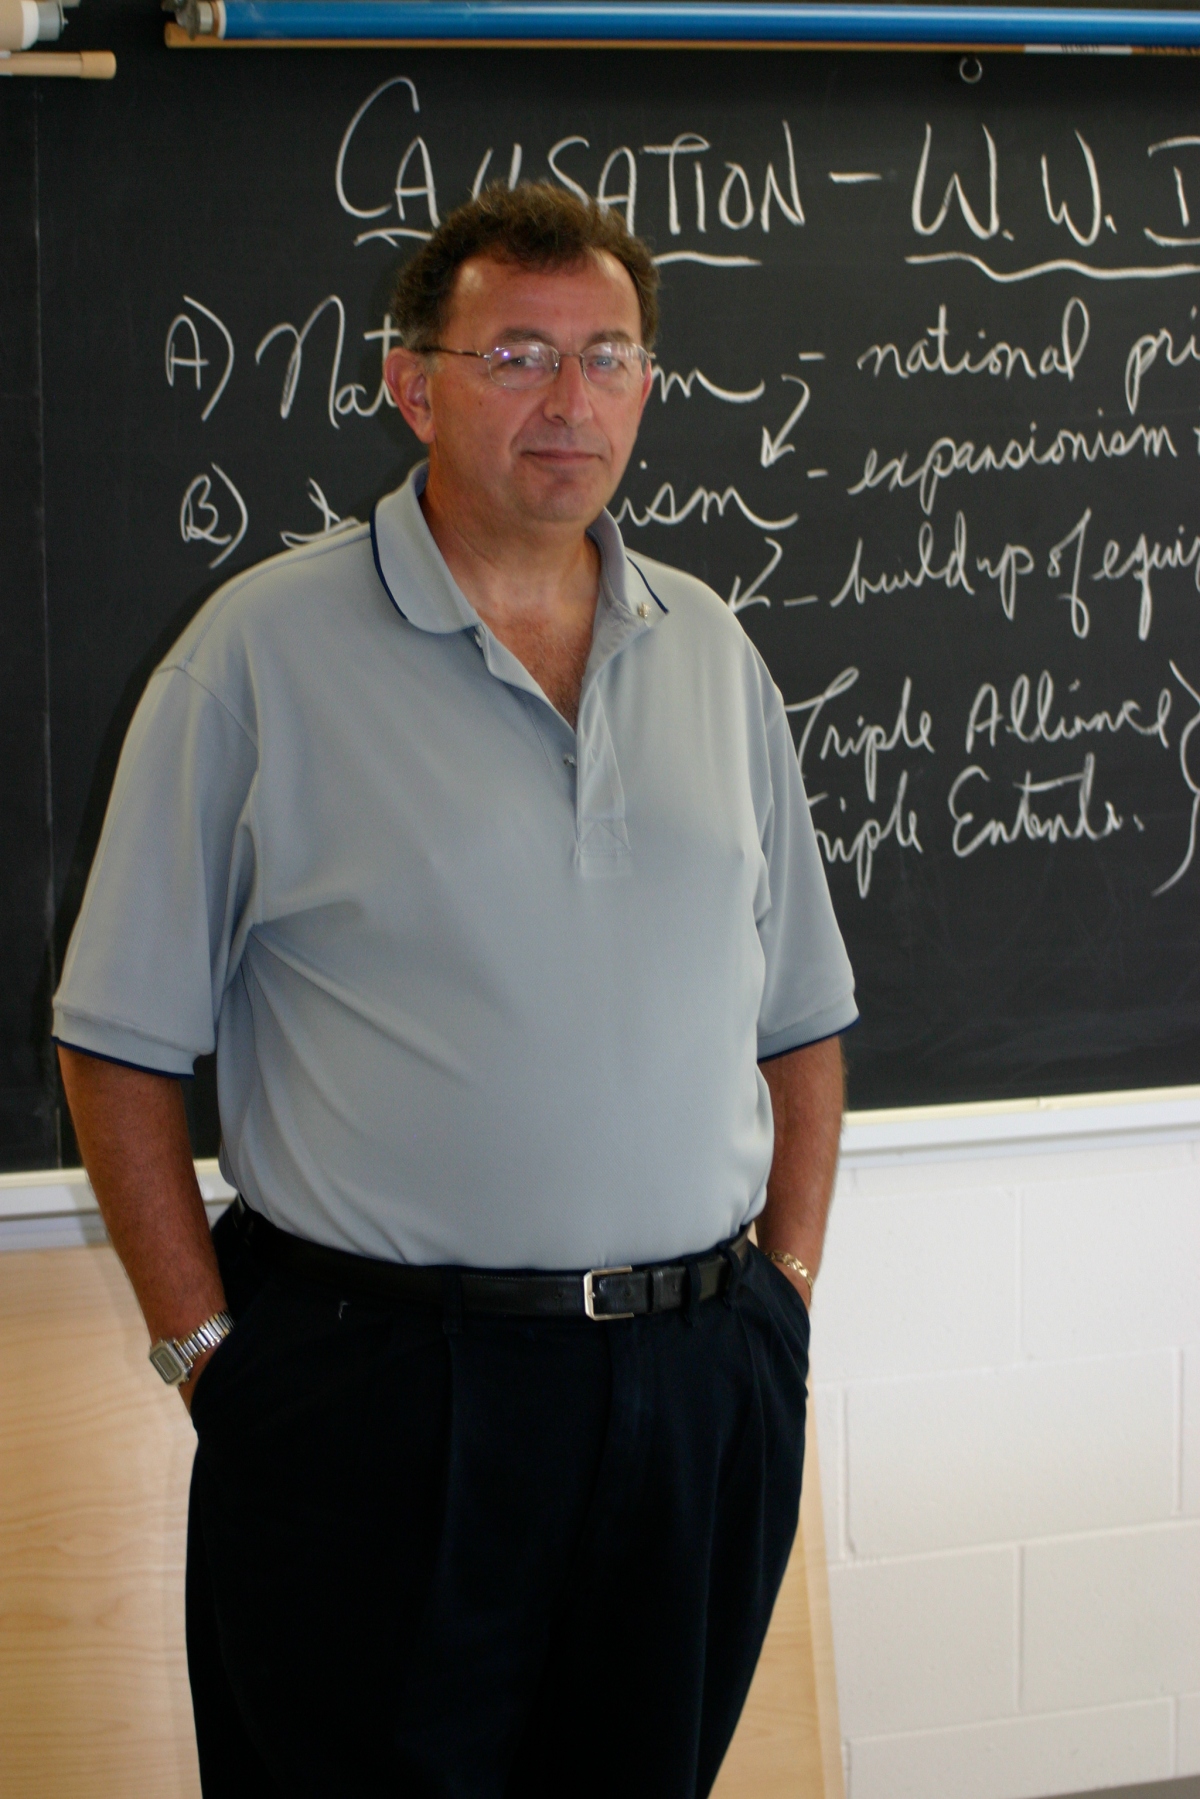 John Fioravanti is standing in front of the blackboard in his classroom.